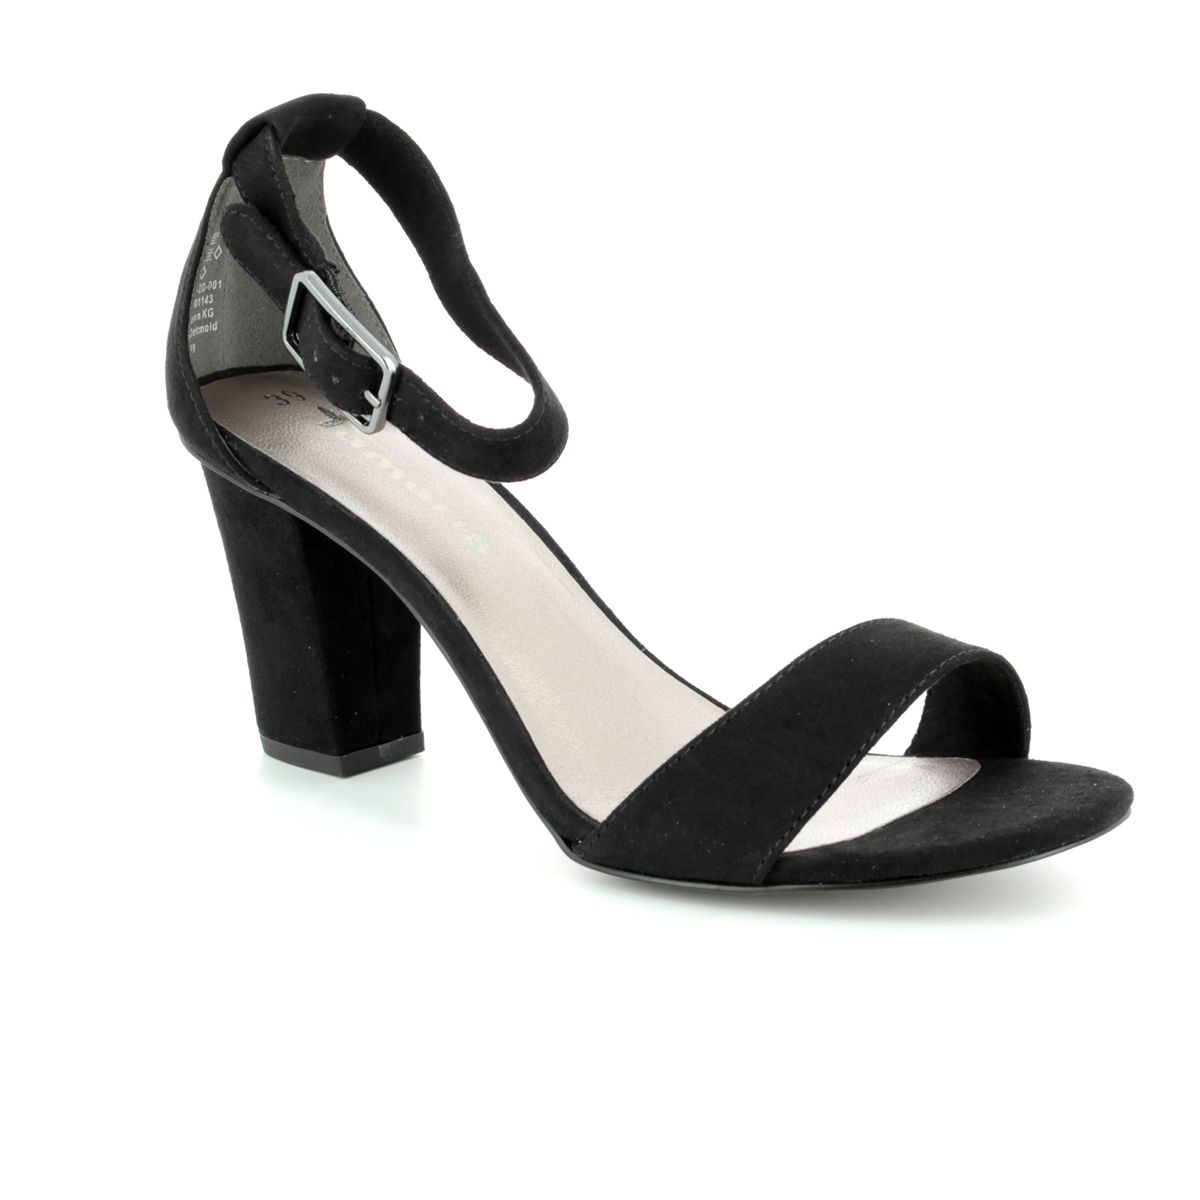 Tamaris Heiti 28397-20-001 Black Heeled Sandals